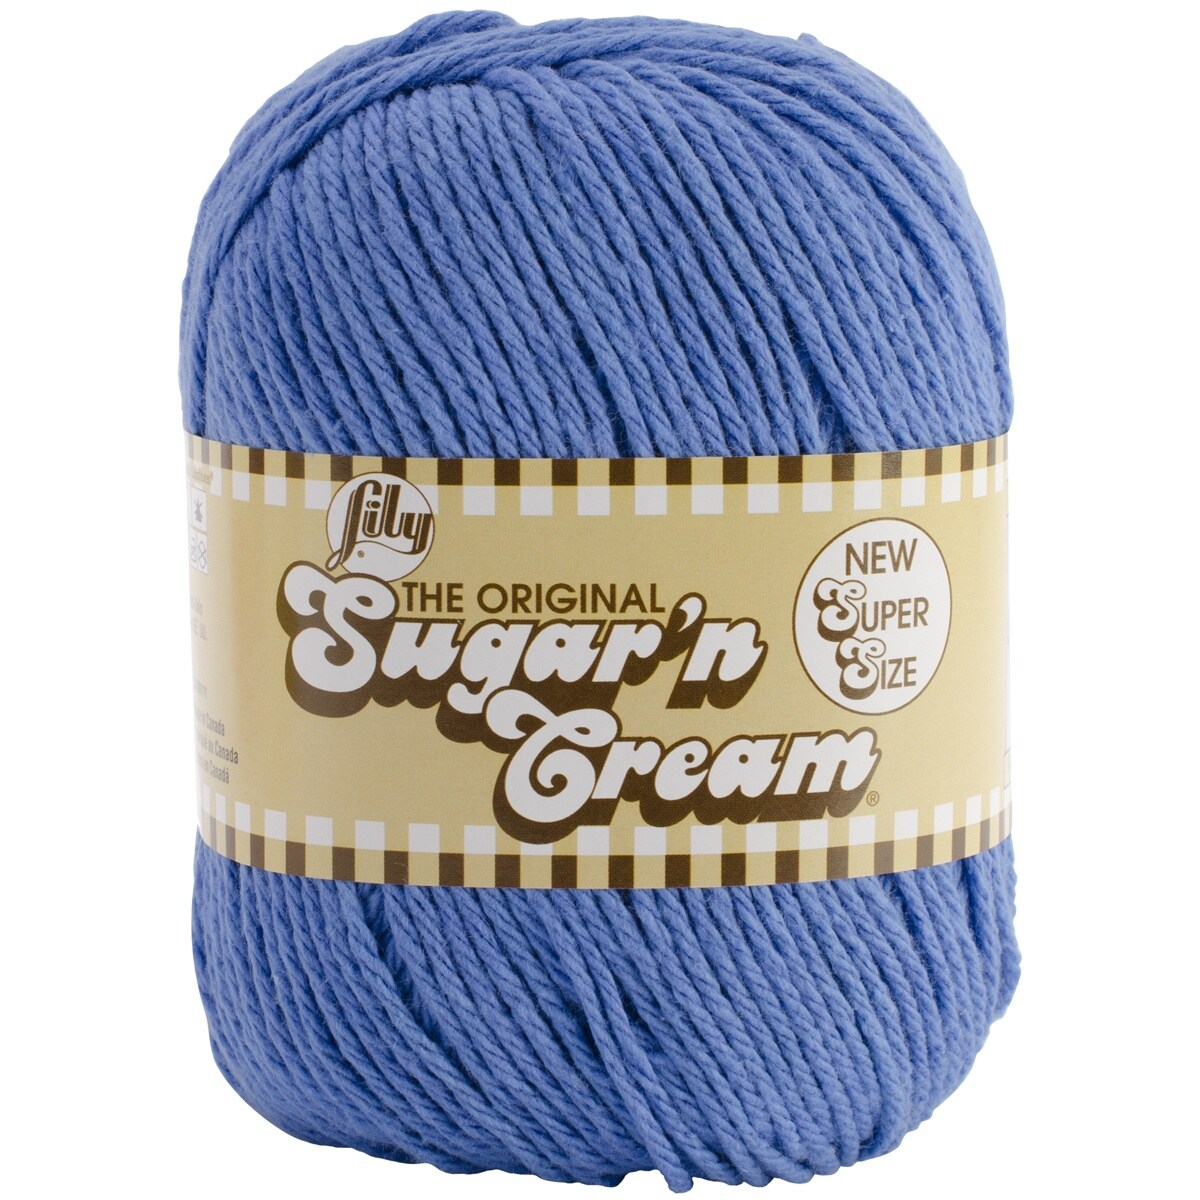 Lily Sugar'N Cream Super Size White Yarn - 6 Pack of 113g/4oz - Cotton - 4  Medium (Worsted) - 200 Yards - Knitting/Crochet